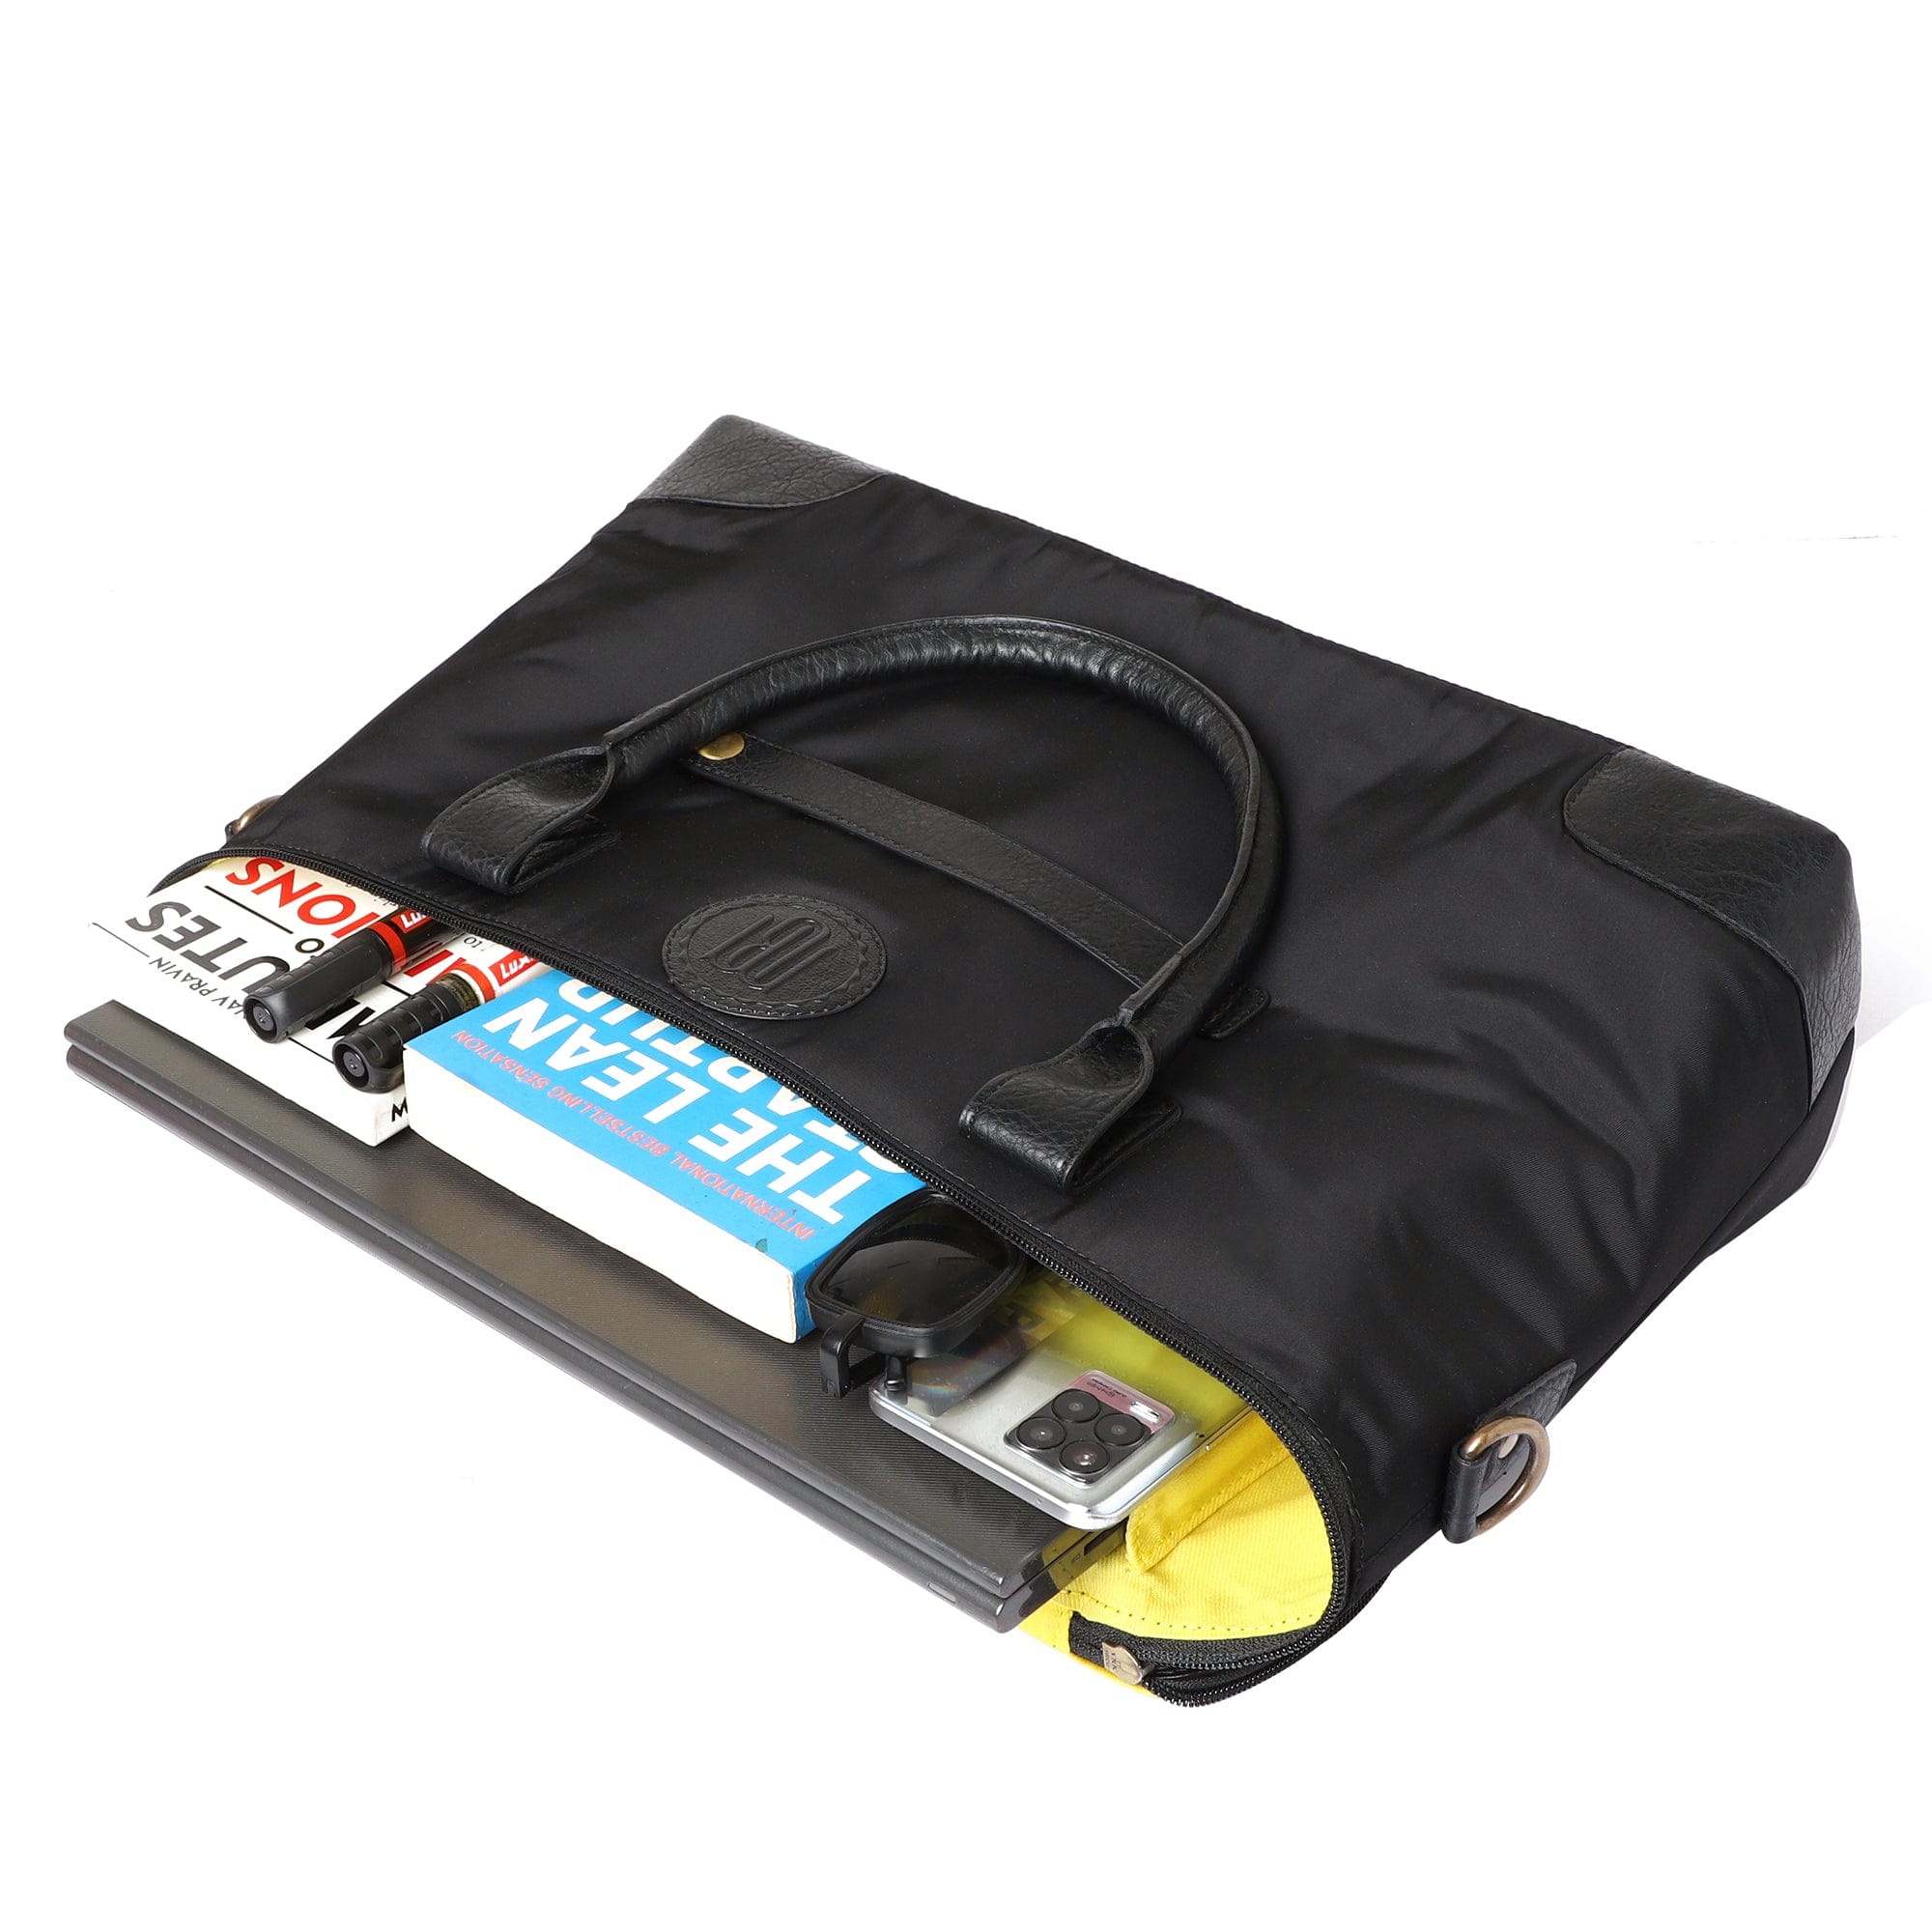 Mona-B Bag Mona B Unisex Messenger | Small Overnighter Bag for upto 14" Laptop/Mac Book/Tablet with Stylish Design: Ohio Black - RP-306 BLK